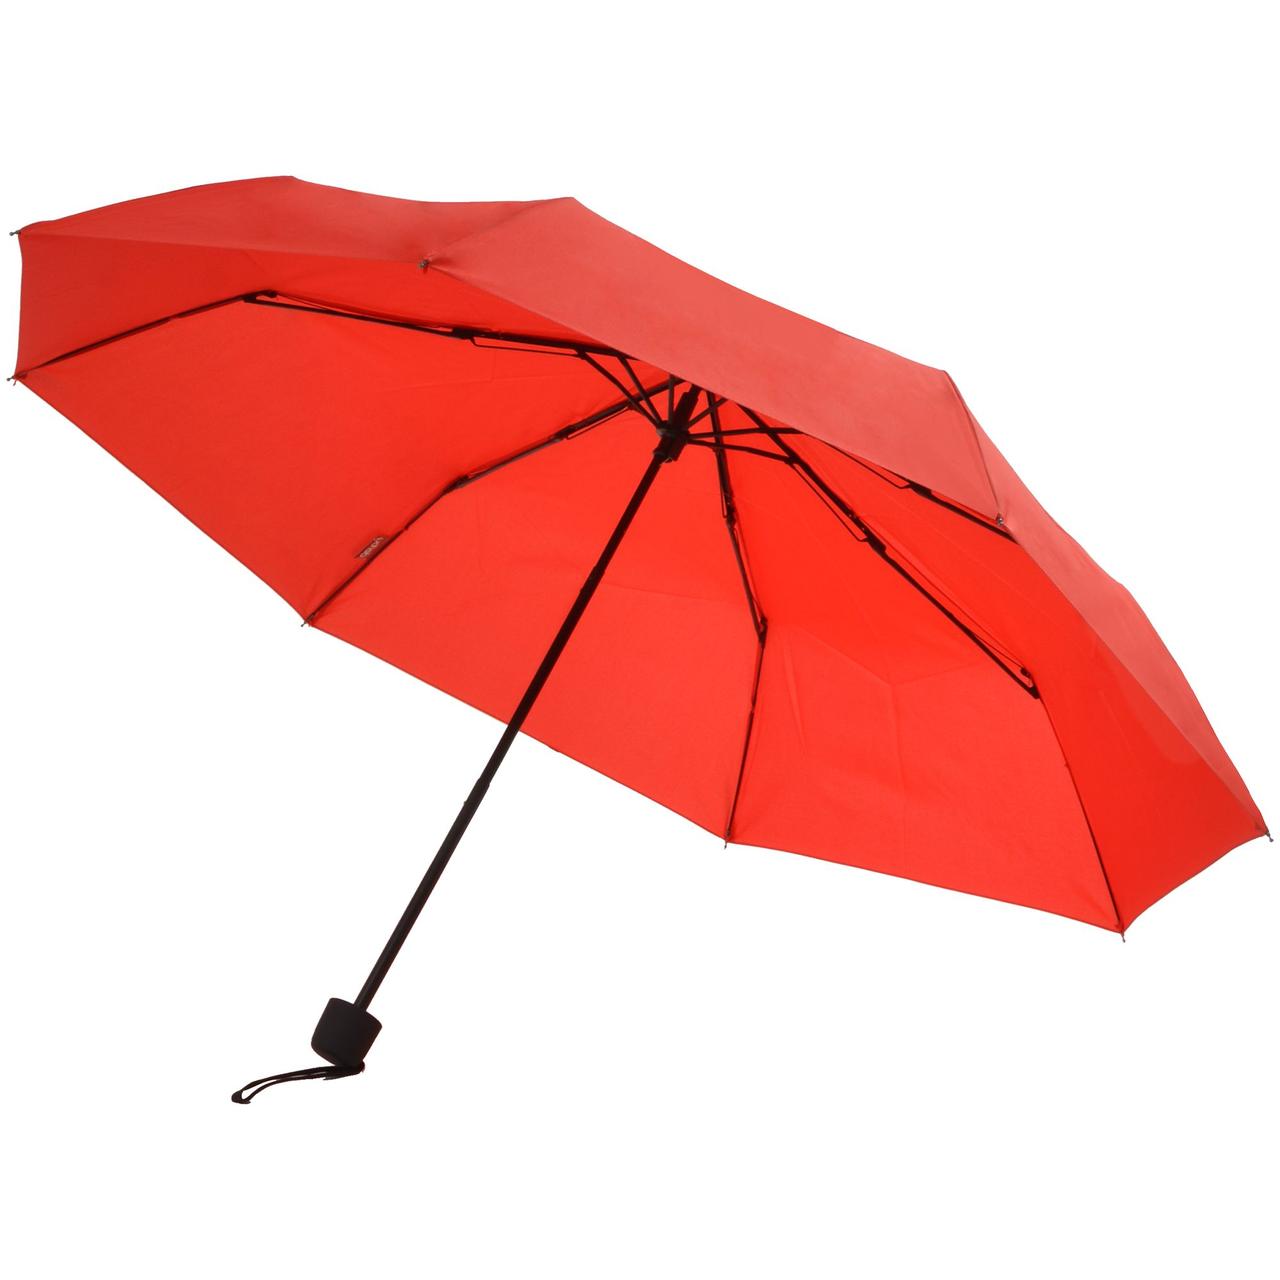 Зонт складной Hit Mini, красный (артикул 11839.50)